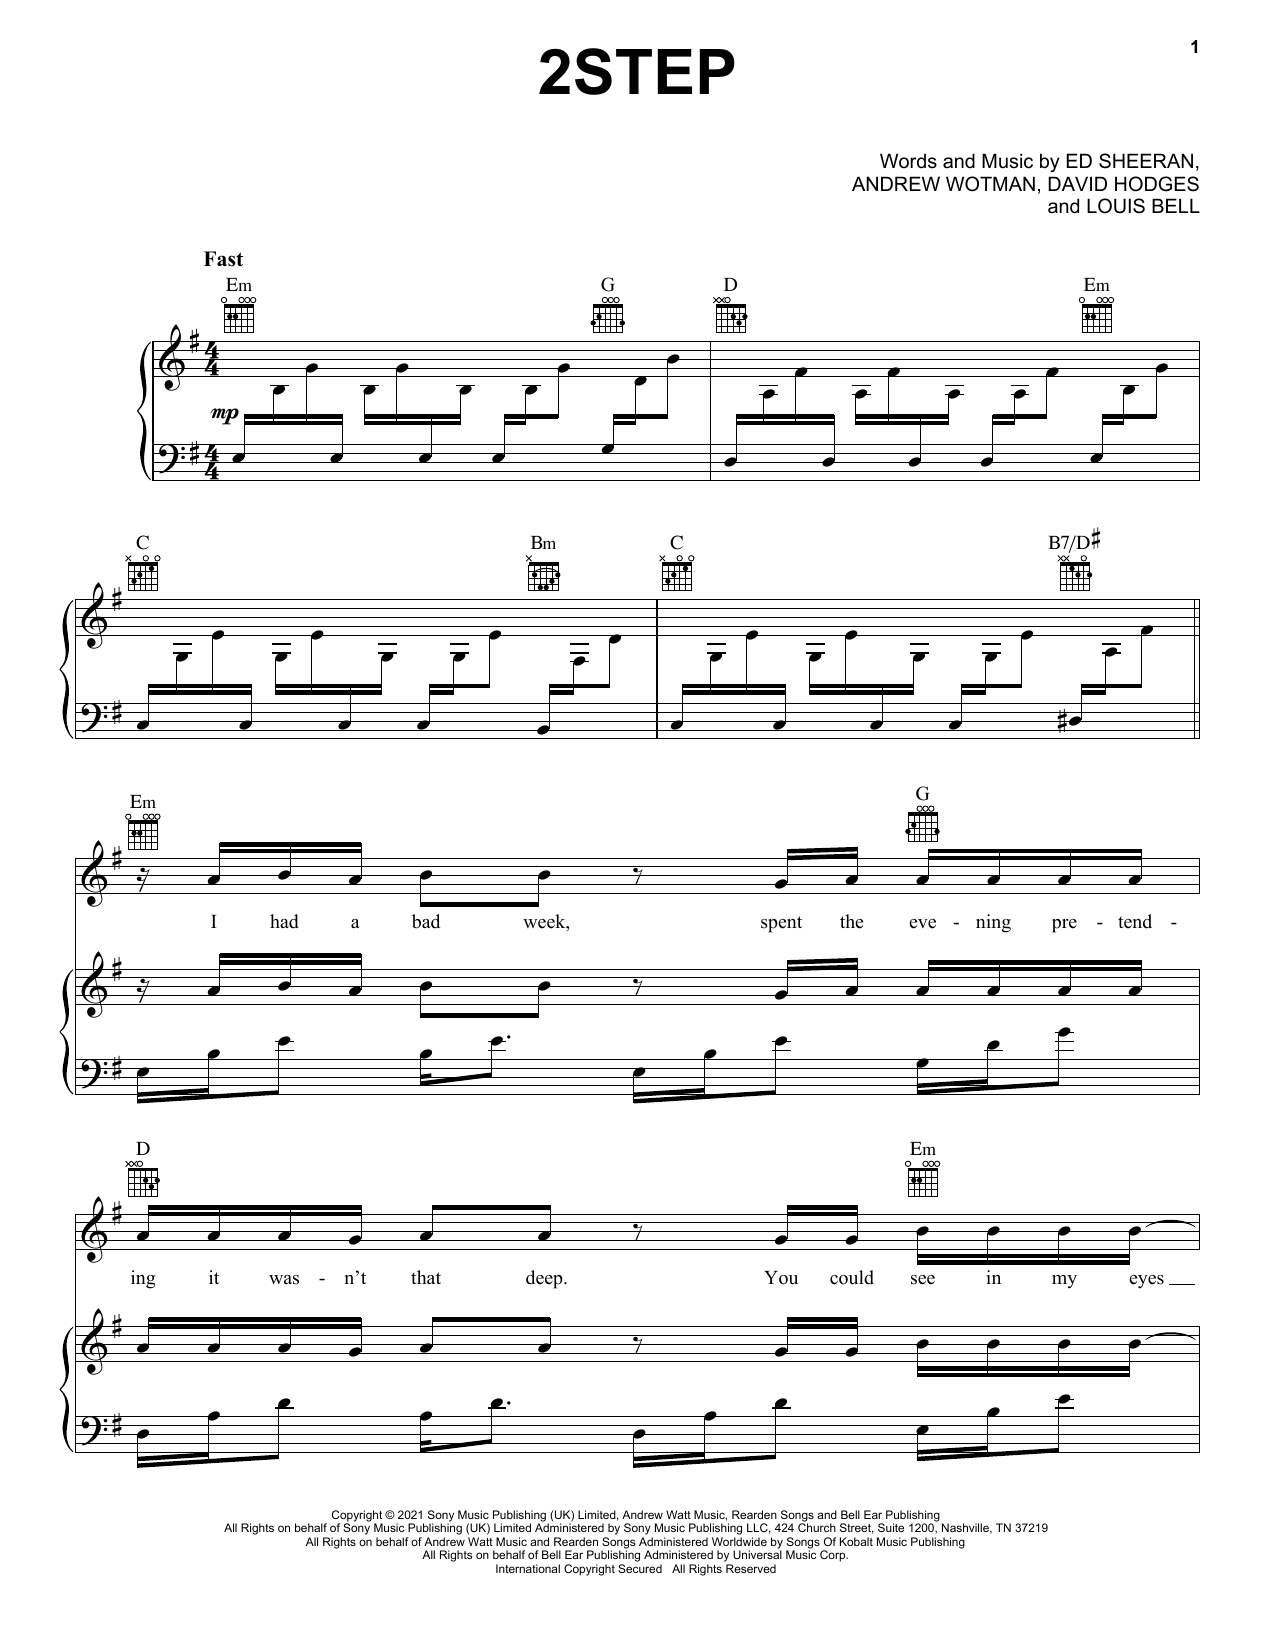 Ed Sheeran 2step Sheet Music Notes & Chords for Piano, Vocal & Guitar (Right-Hand Melody) - Download or Print PDF